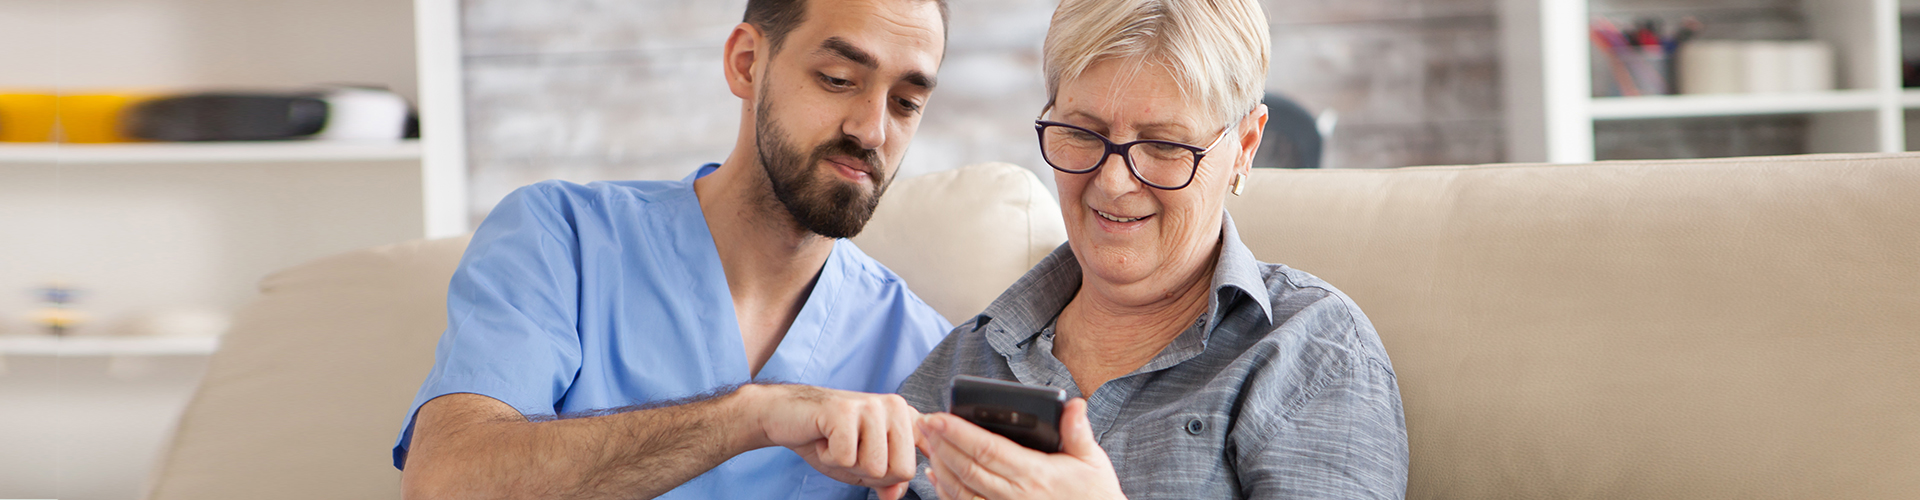 caregiver assisting the elderly using smartphone